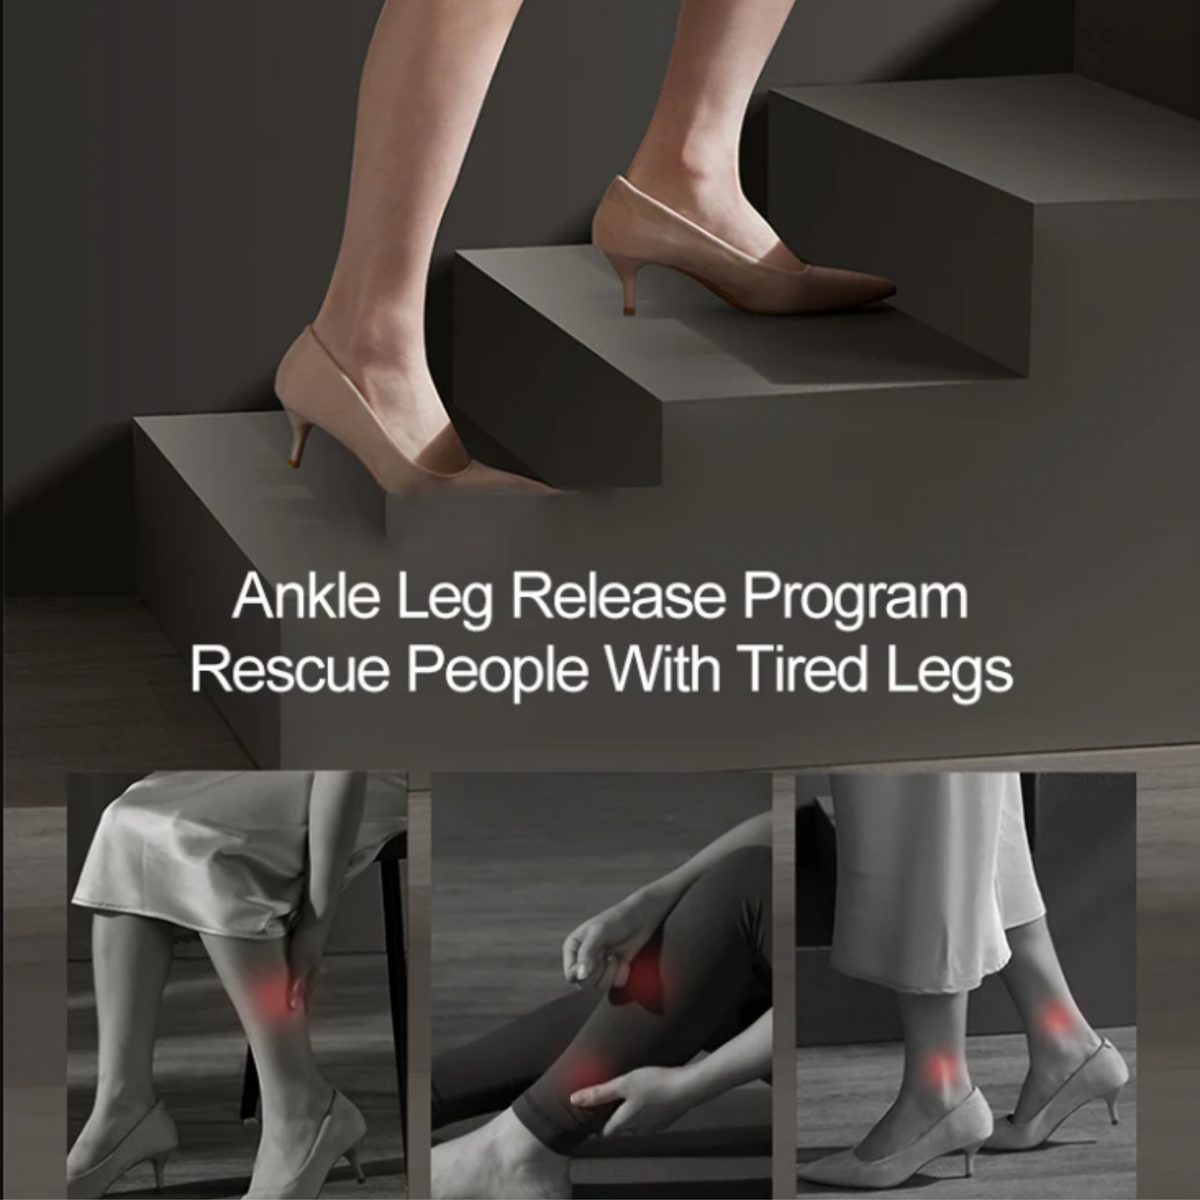 Neuropathy Premium Foot Massager